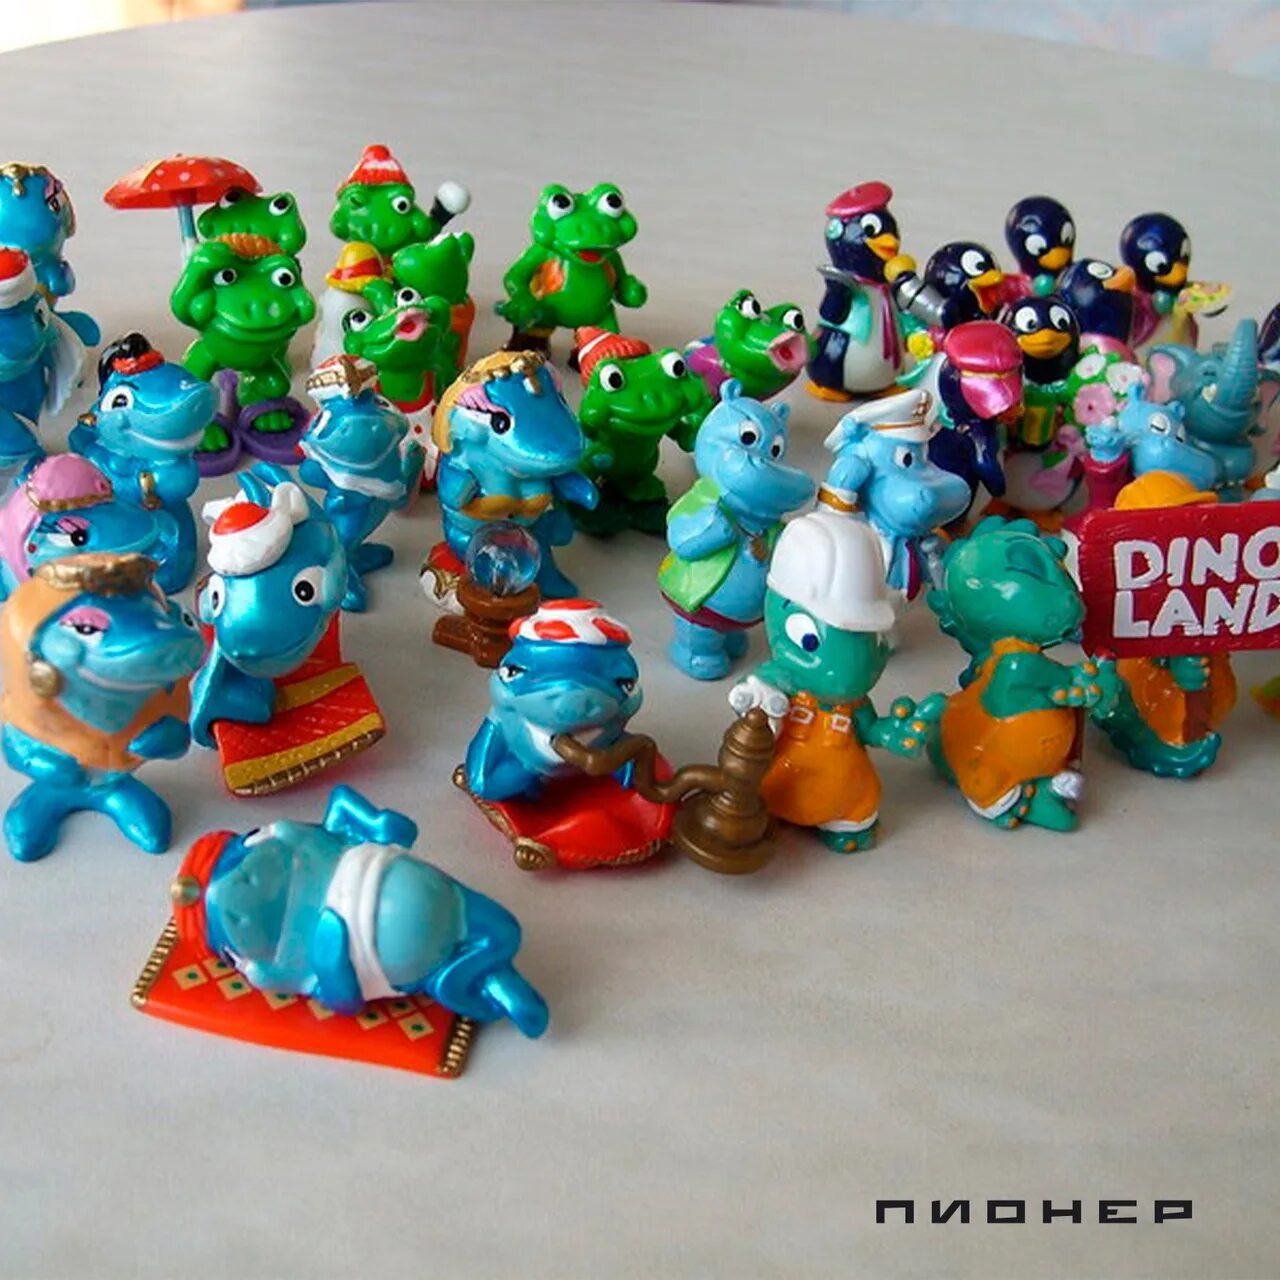 Киндеры раньше. Киндер игрушки 90-х. Киндер сюрприз 90е яйцо. Игрушки из Киндер сюрприза 90-х. Коллекция игрушек Киндер сюрприз 90-х.